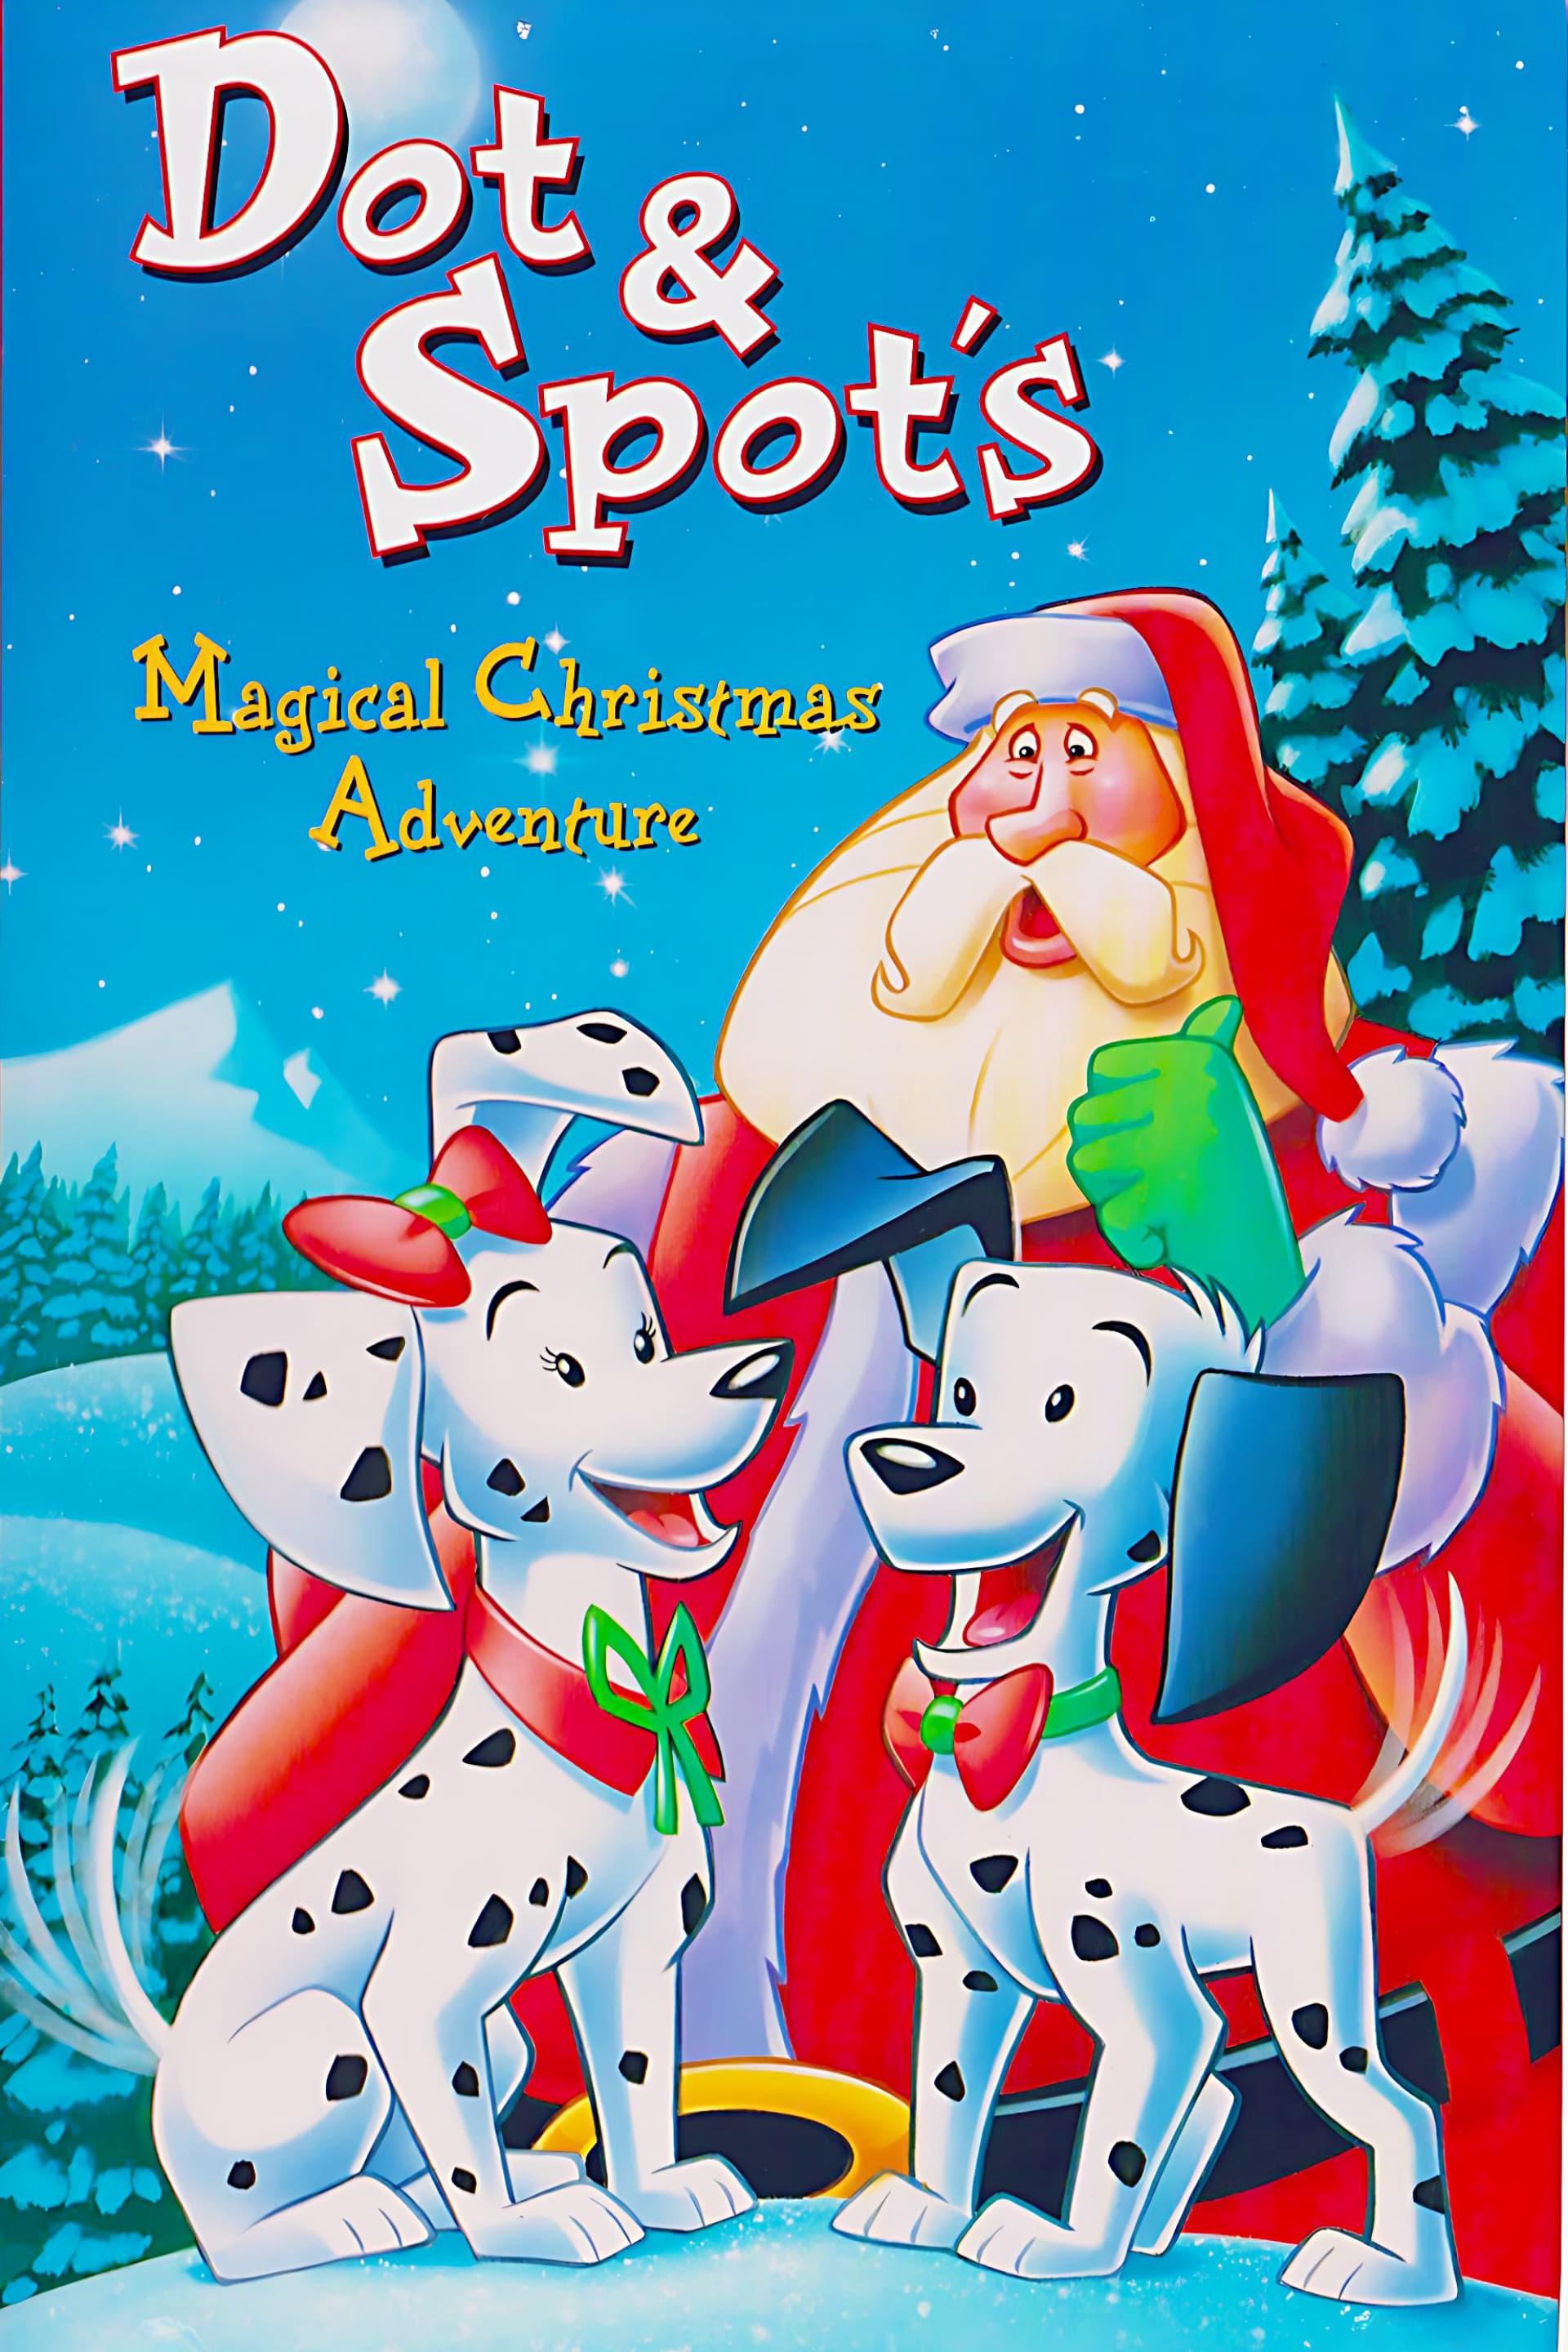 Dot & Spot's Magical Christmas Adventure poster